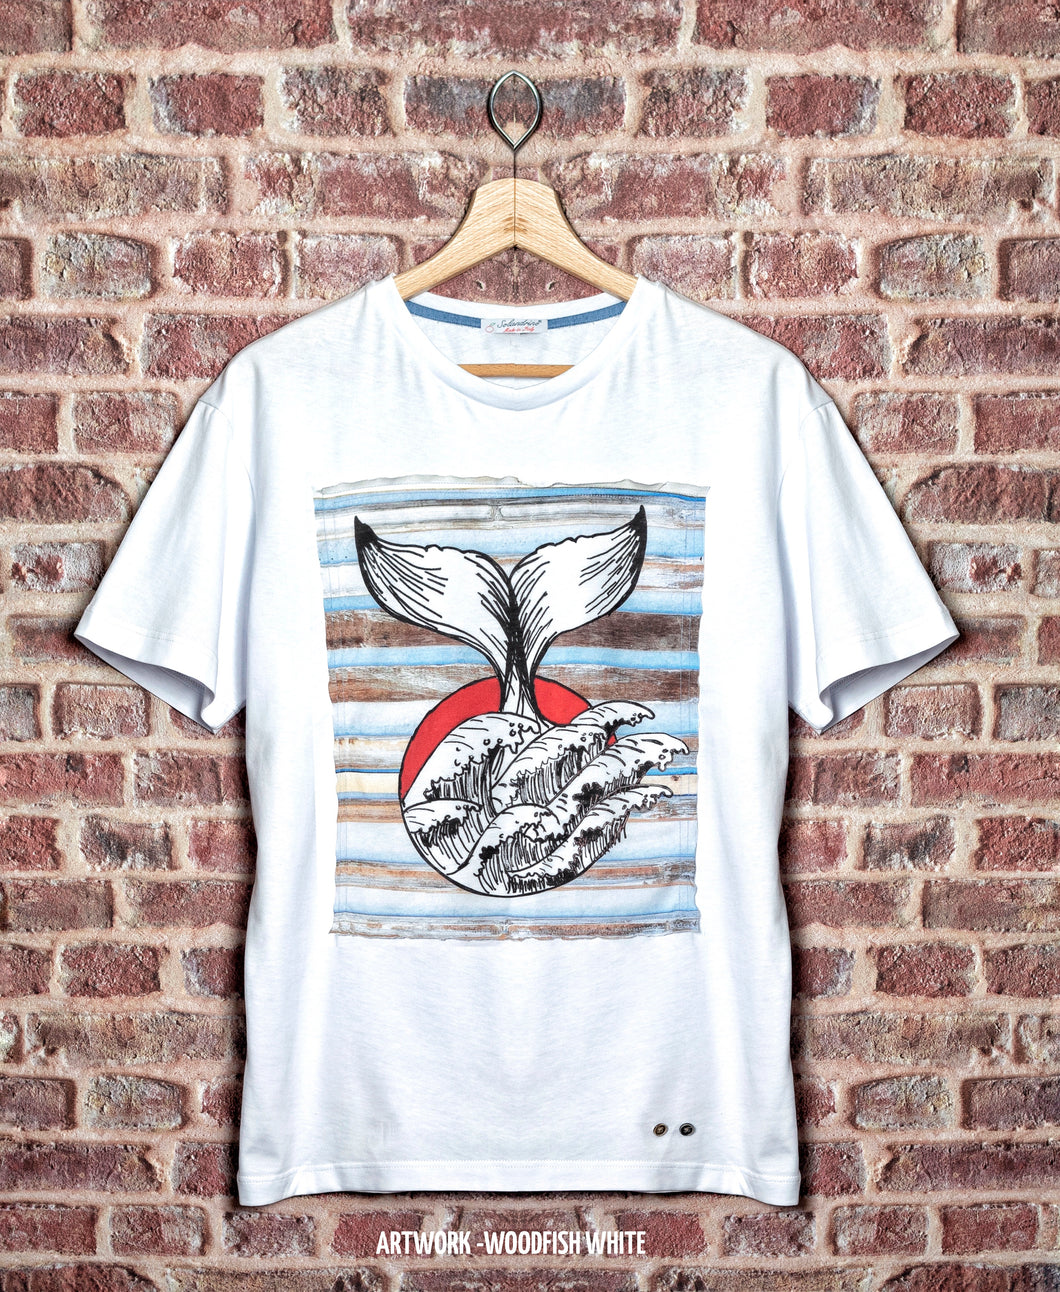 T-shirt made in italy wood-fish 100% fresco cotone jersey pettinato